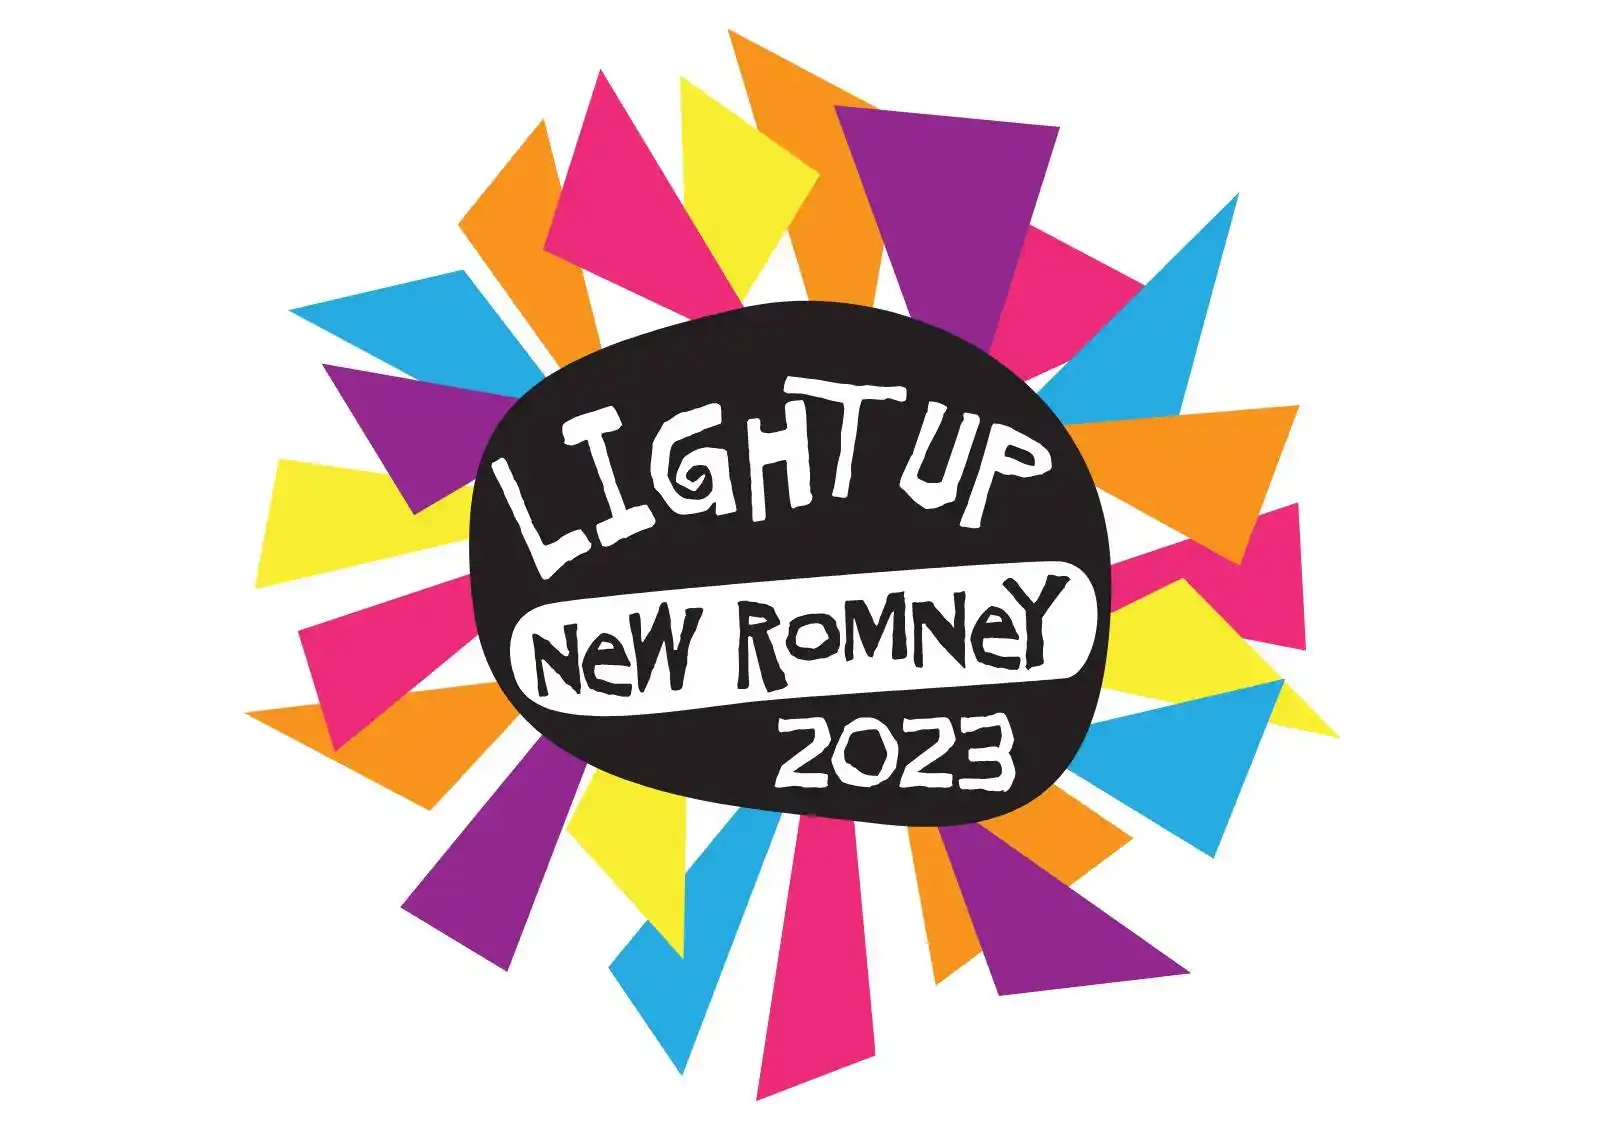 Light Up New Romney